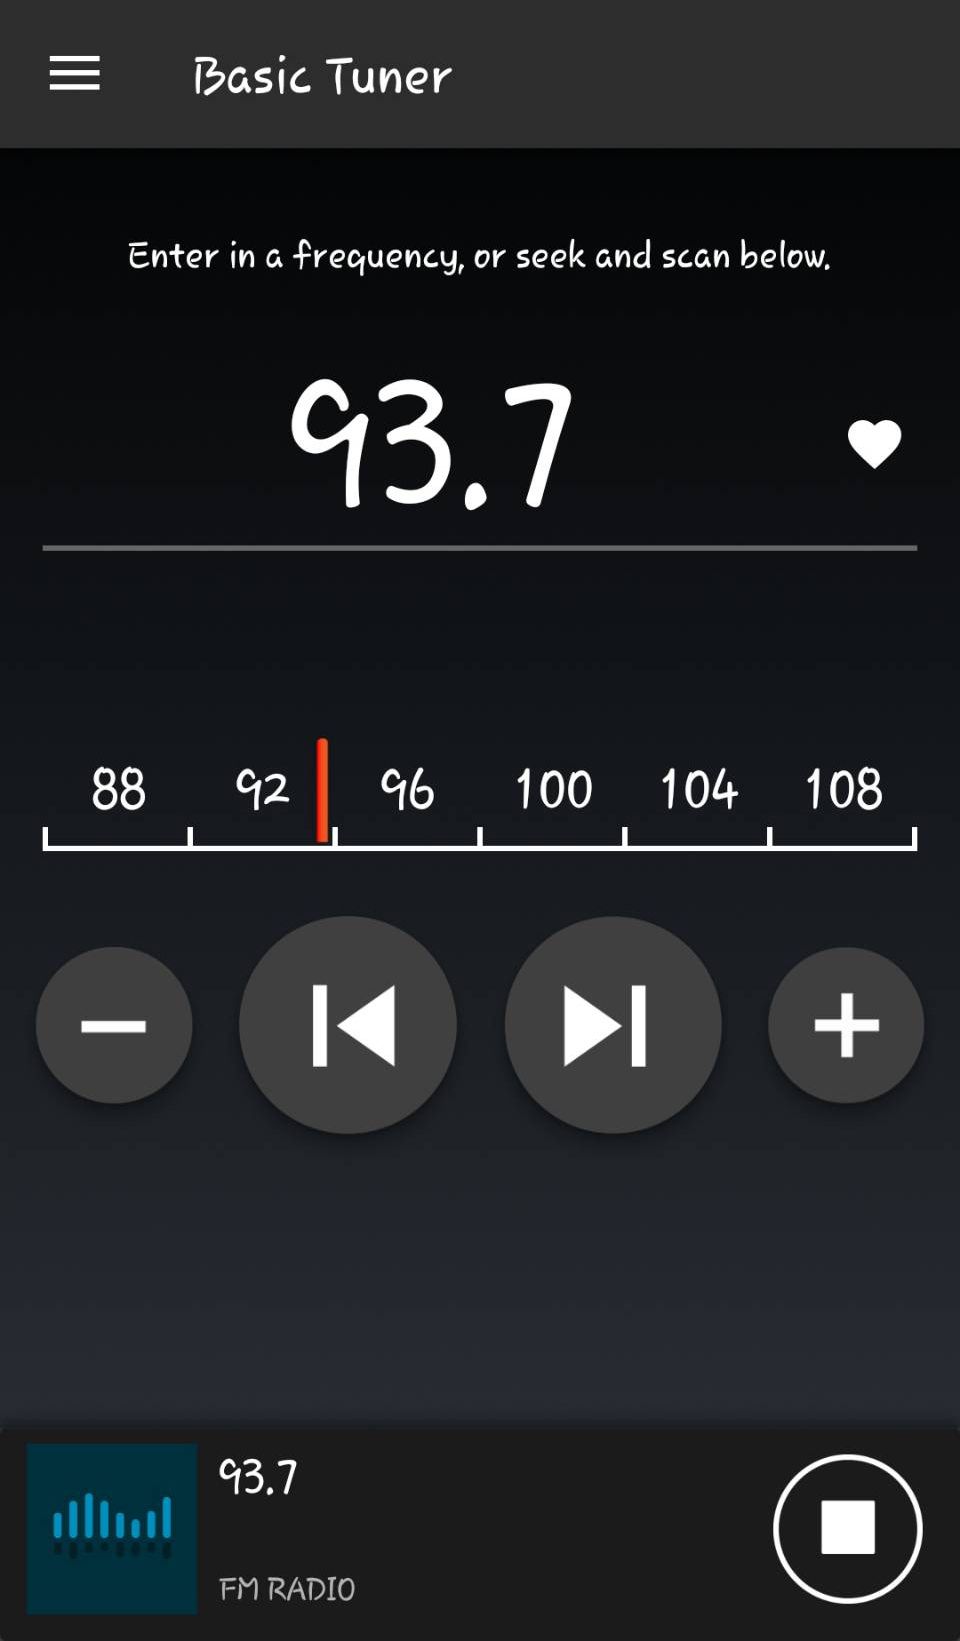 NextRadio app basic tuner